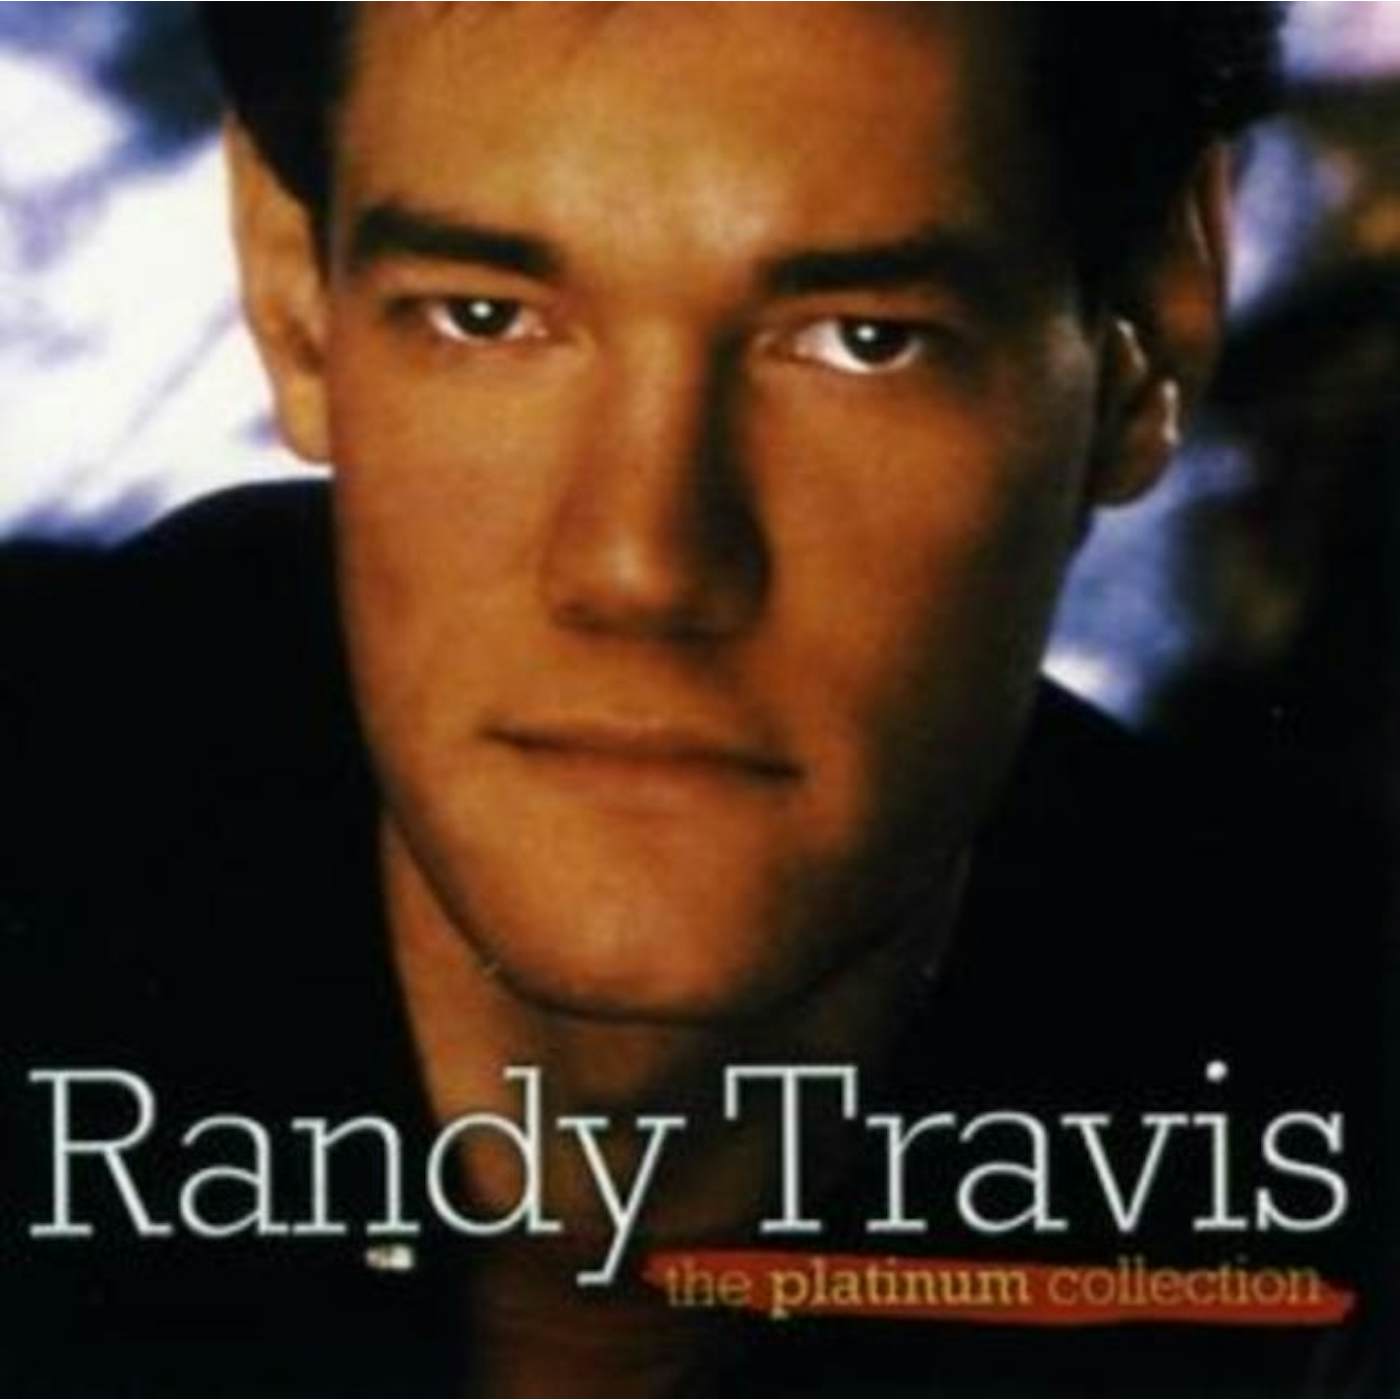 Randy Travis CD - The Platinum Collection